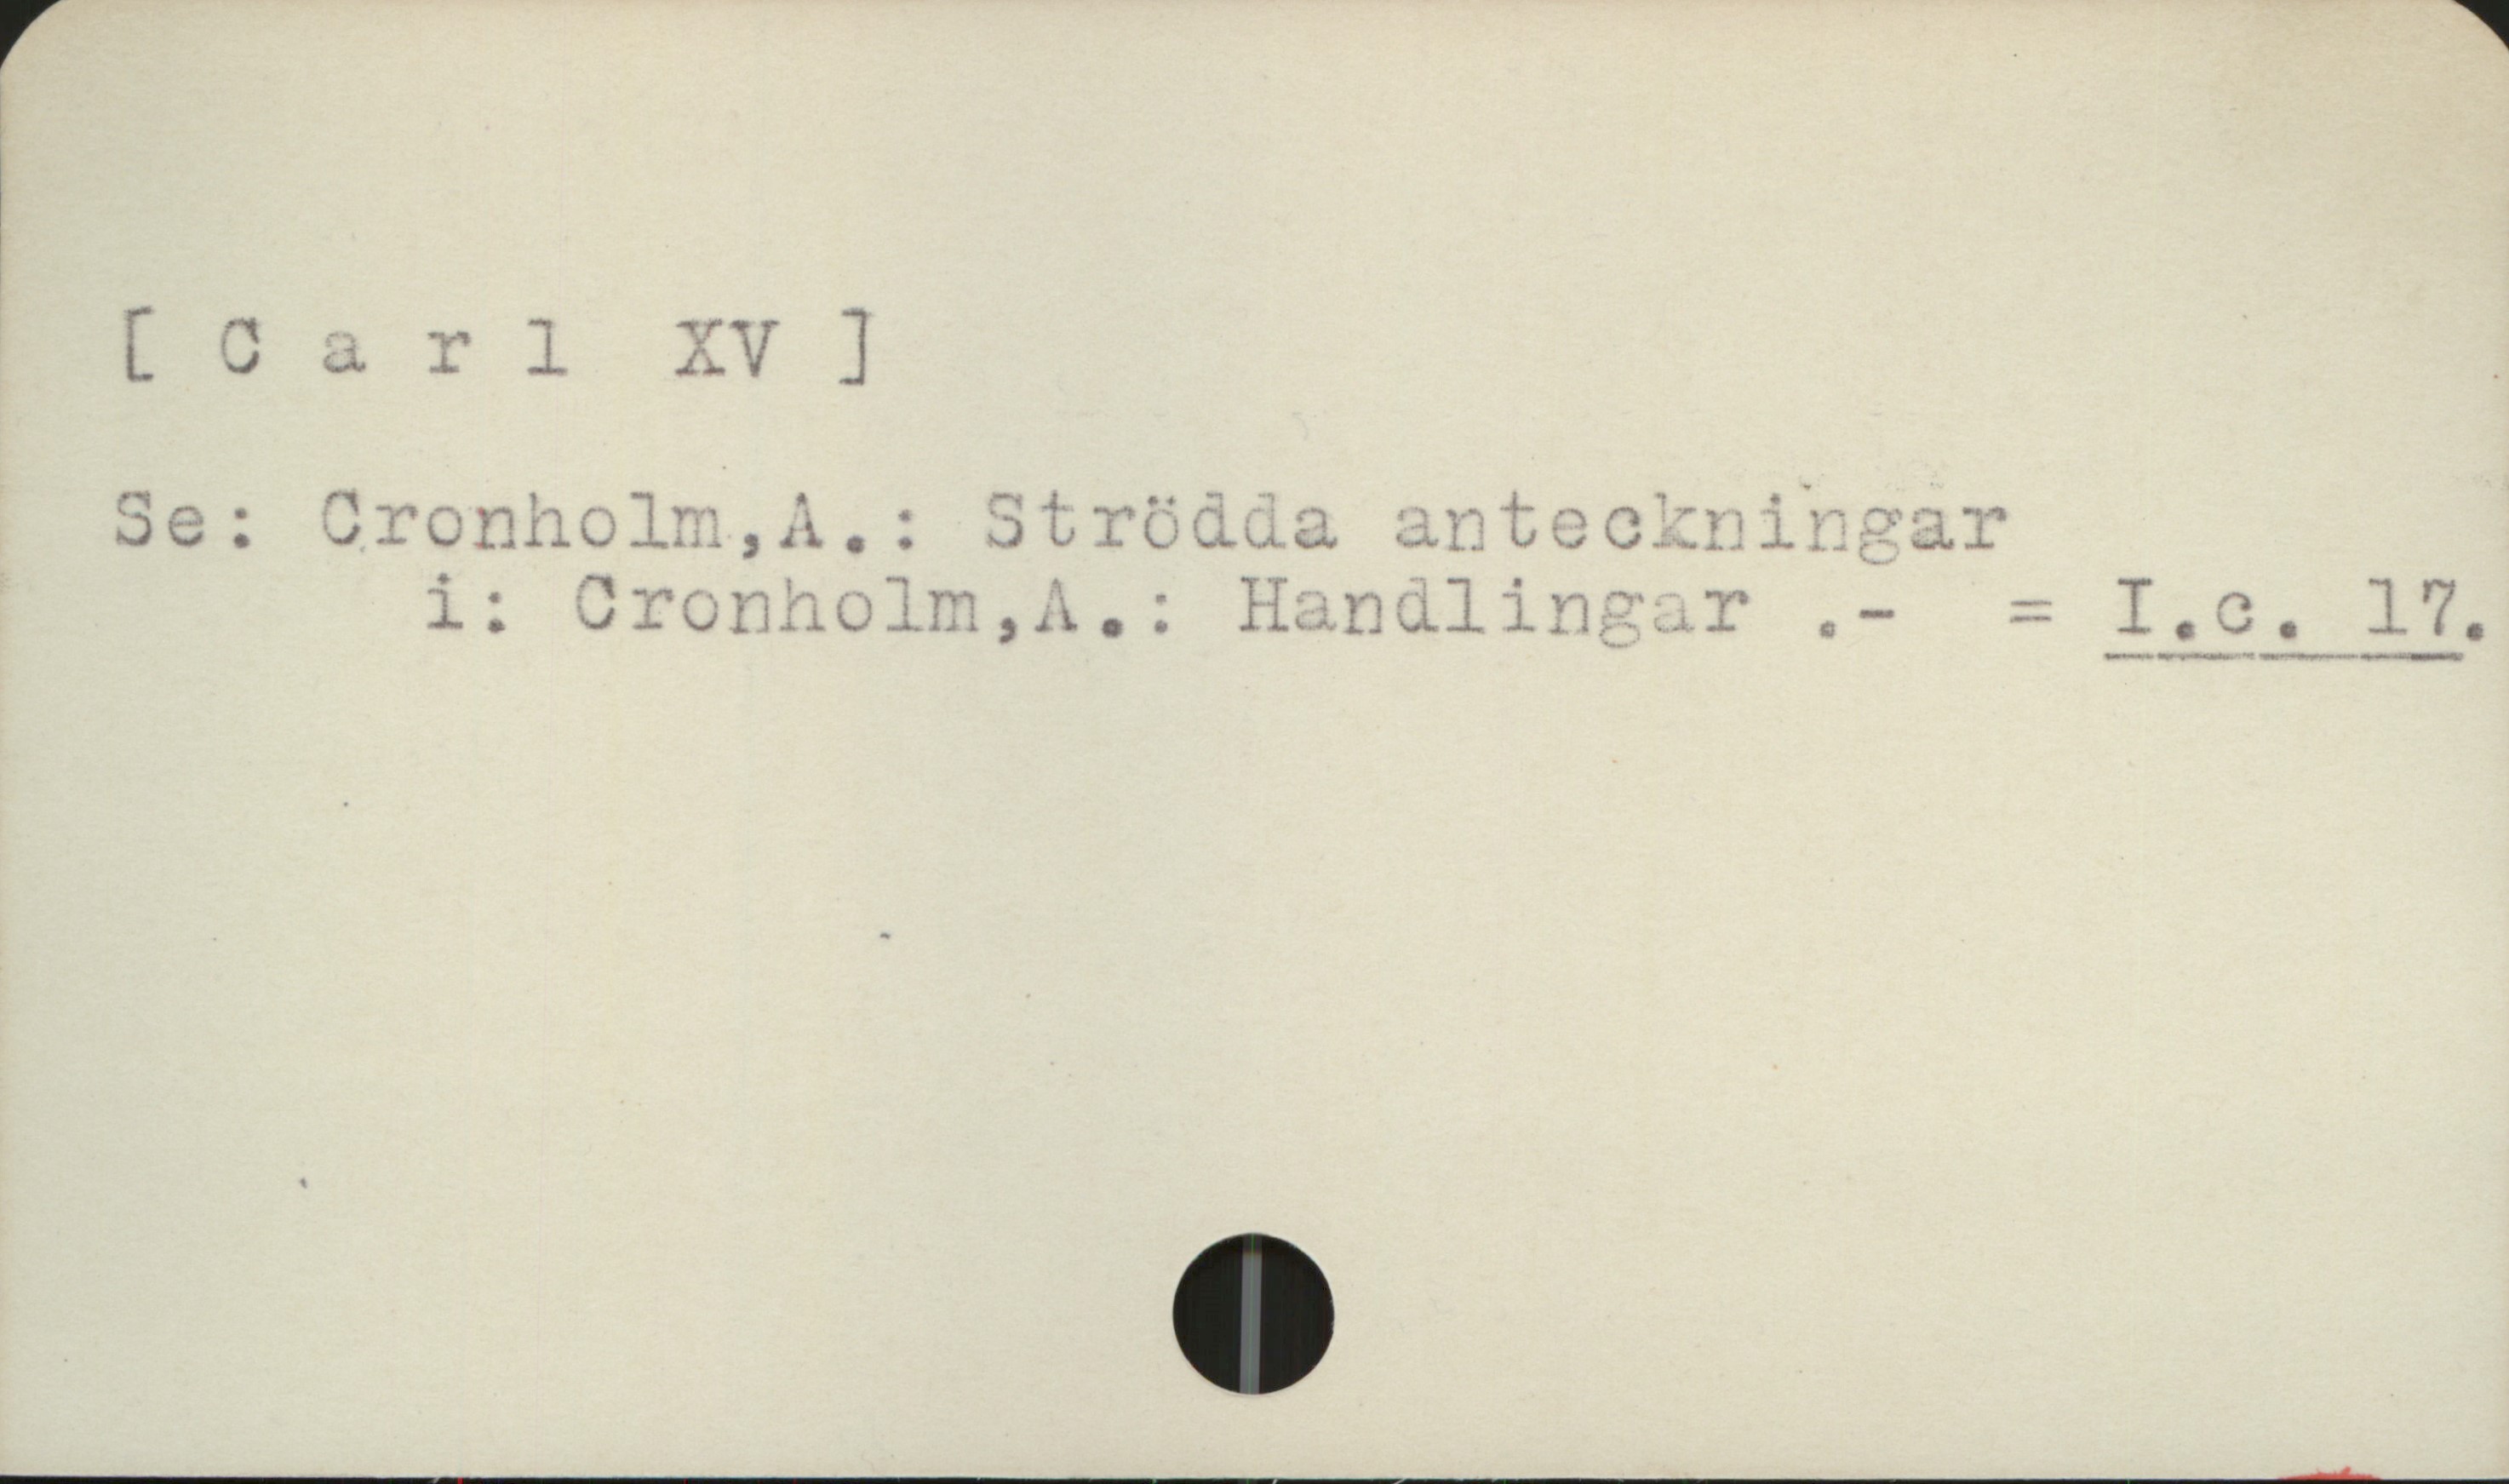  [ Garl XV ] i '
Je: Cronholm,å.: Strödda antocknirrar
i% Sronholm,4&,.: Heonulincz.r .- = I.ec. 17.

